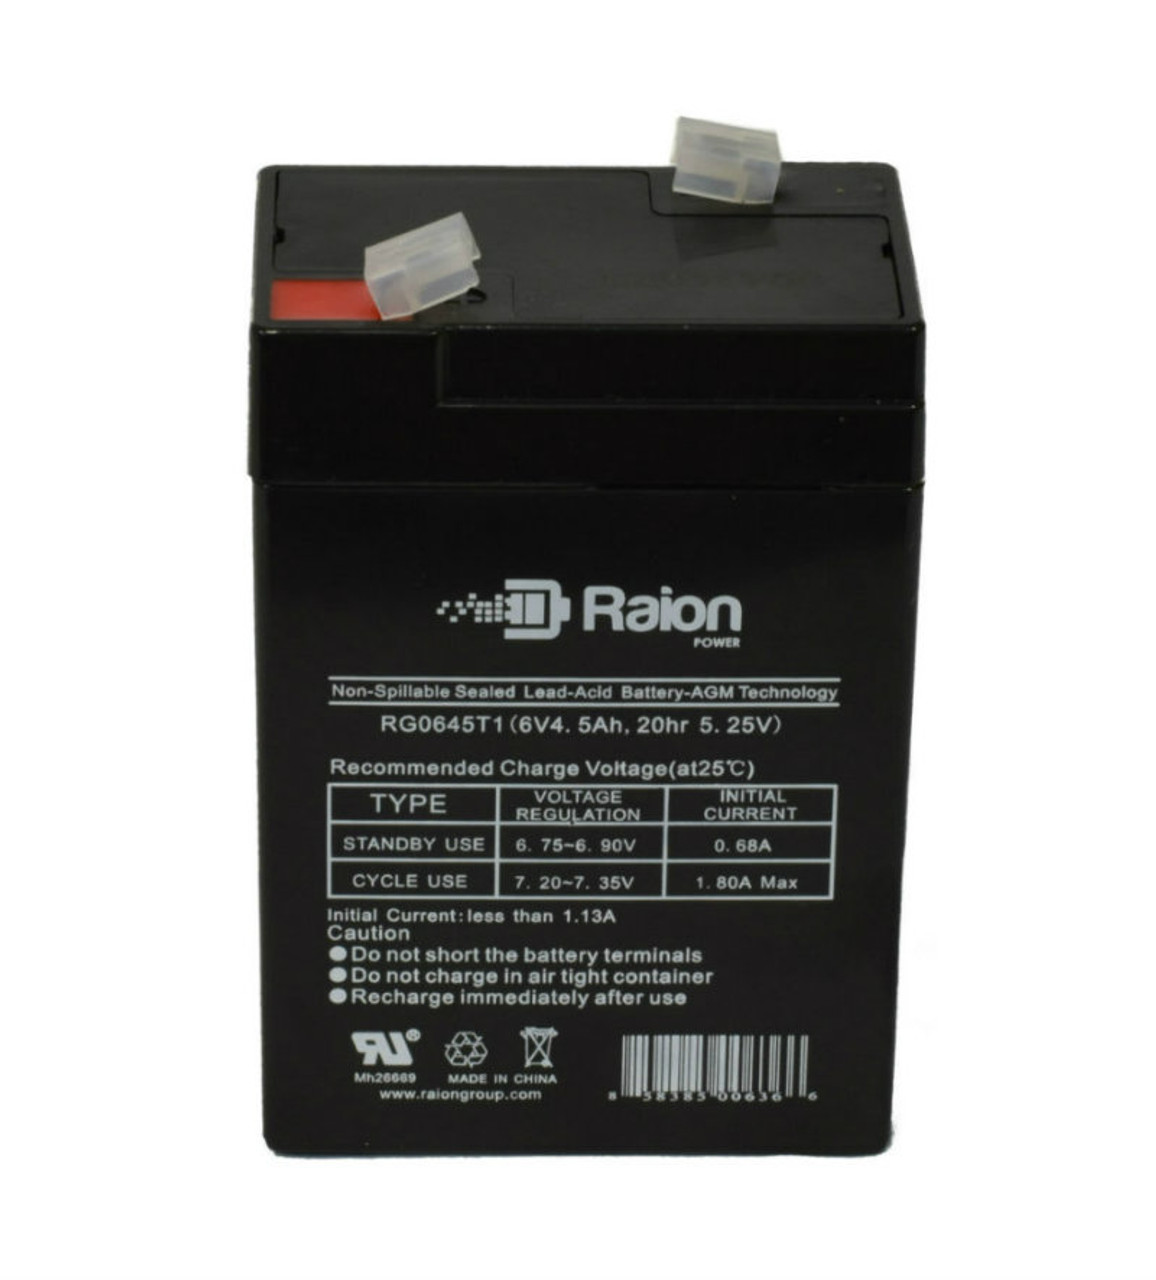 Raion Power RG0645T1 Replacement Battery Cartridge for Ladd Steritak J3000 Inter Cranial Pressure